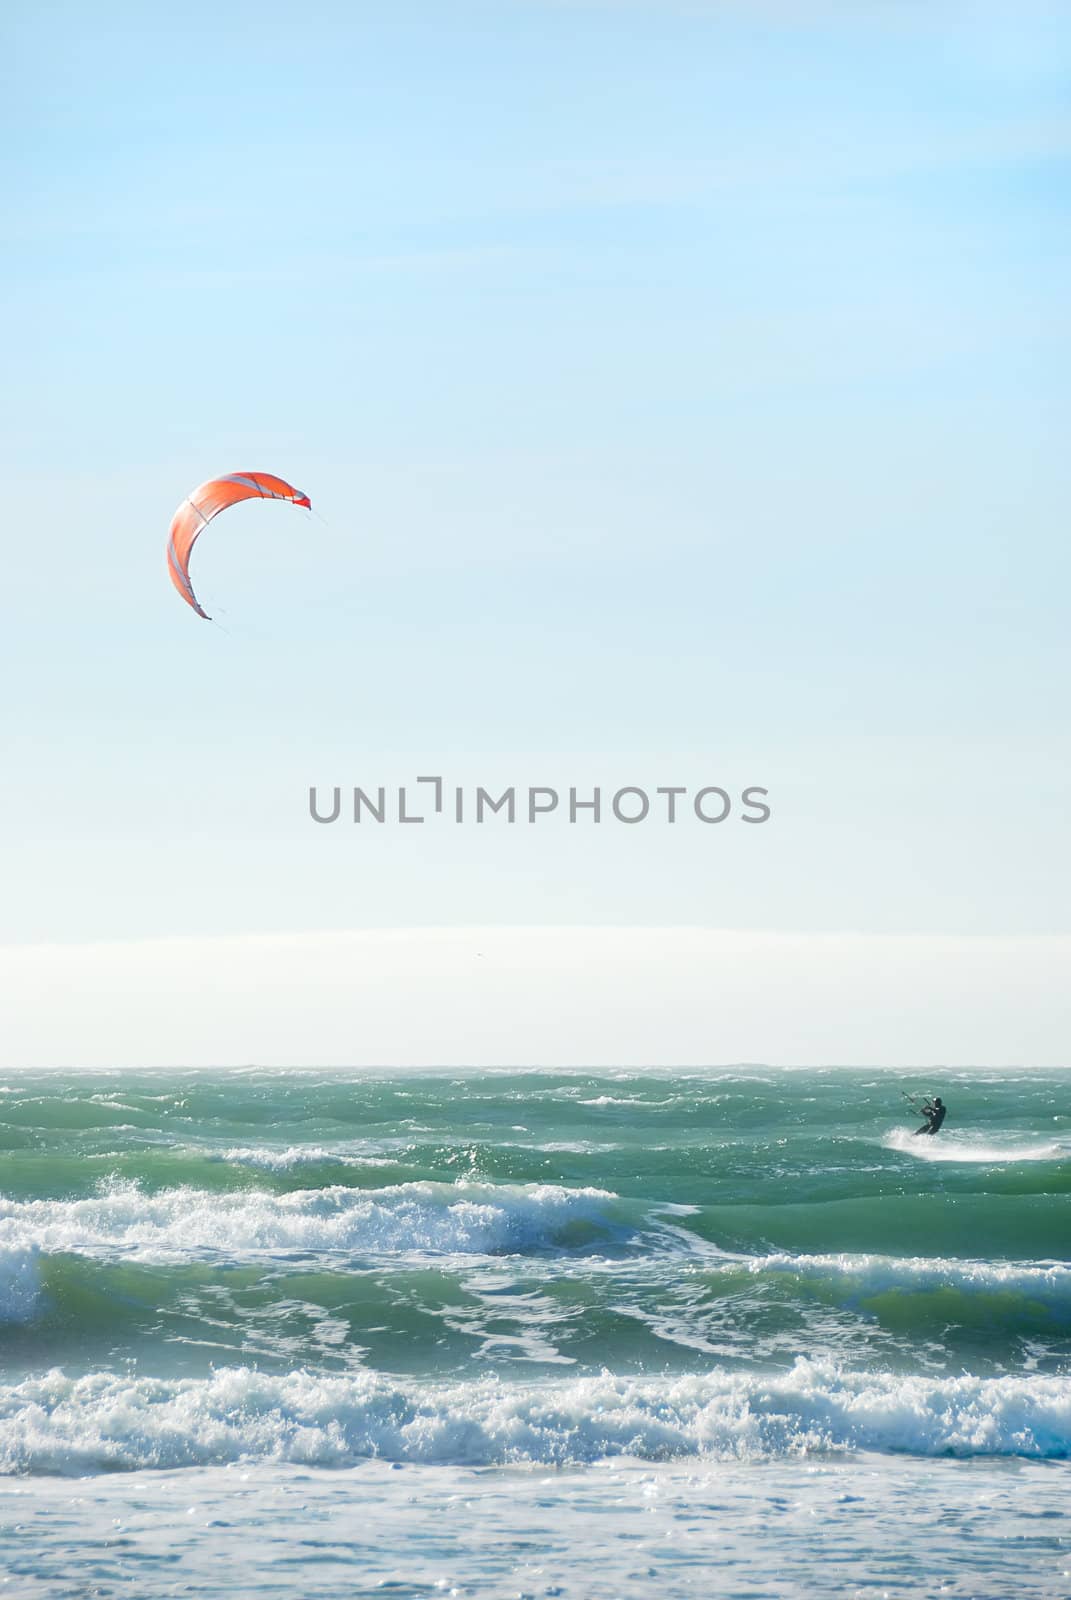 Kite Surfing in San Francisco by goldenangel